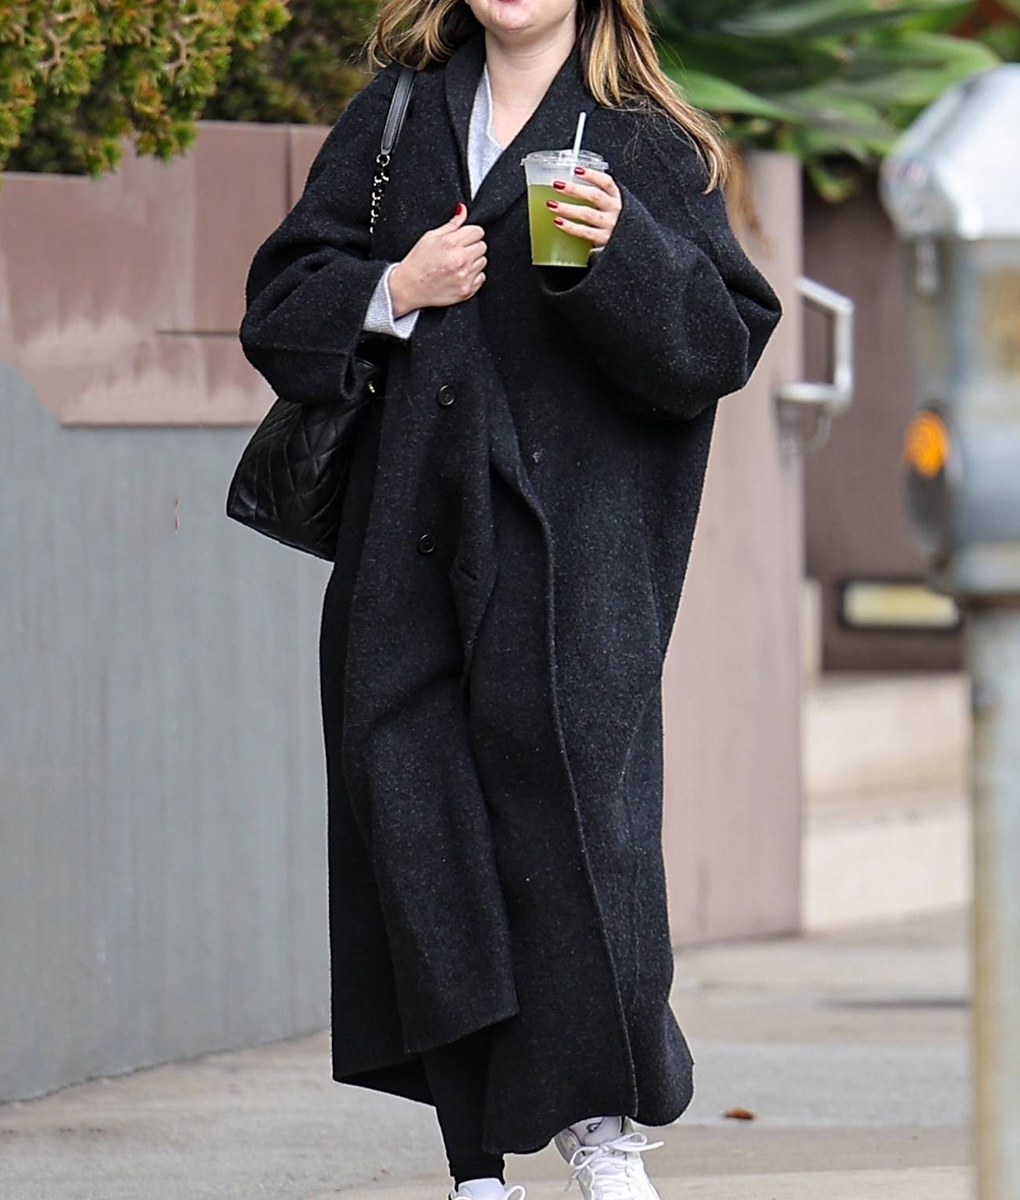 Selena Gomez Long Black Coat (4)